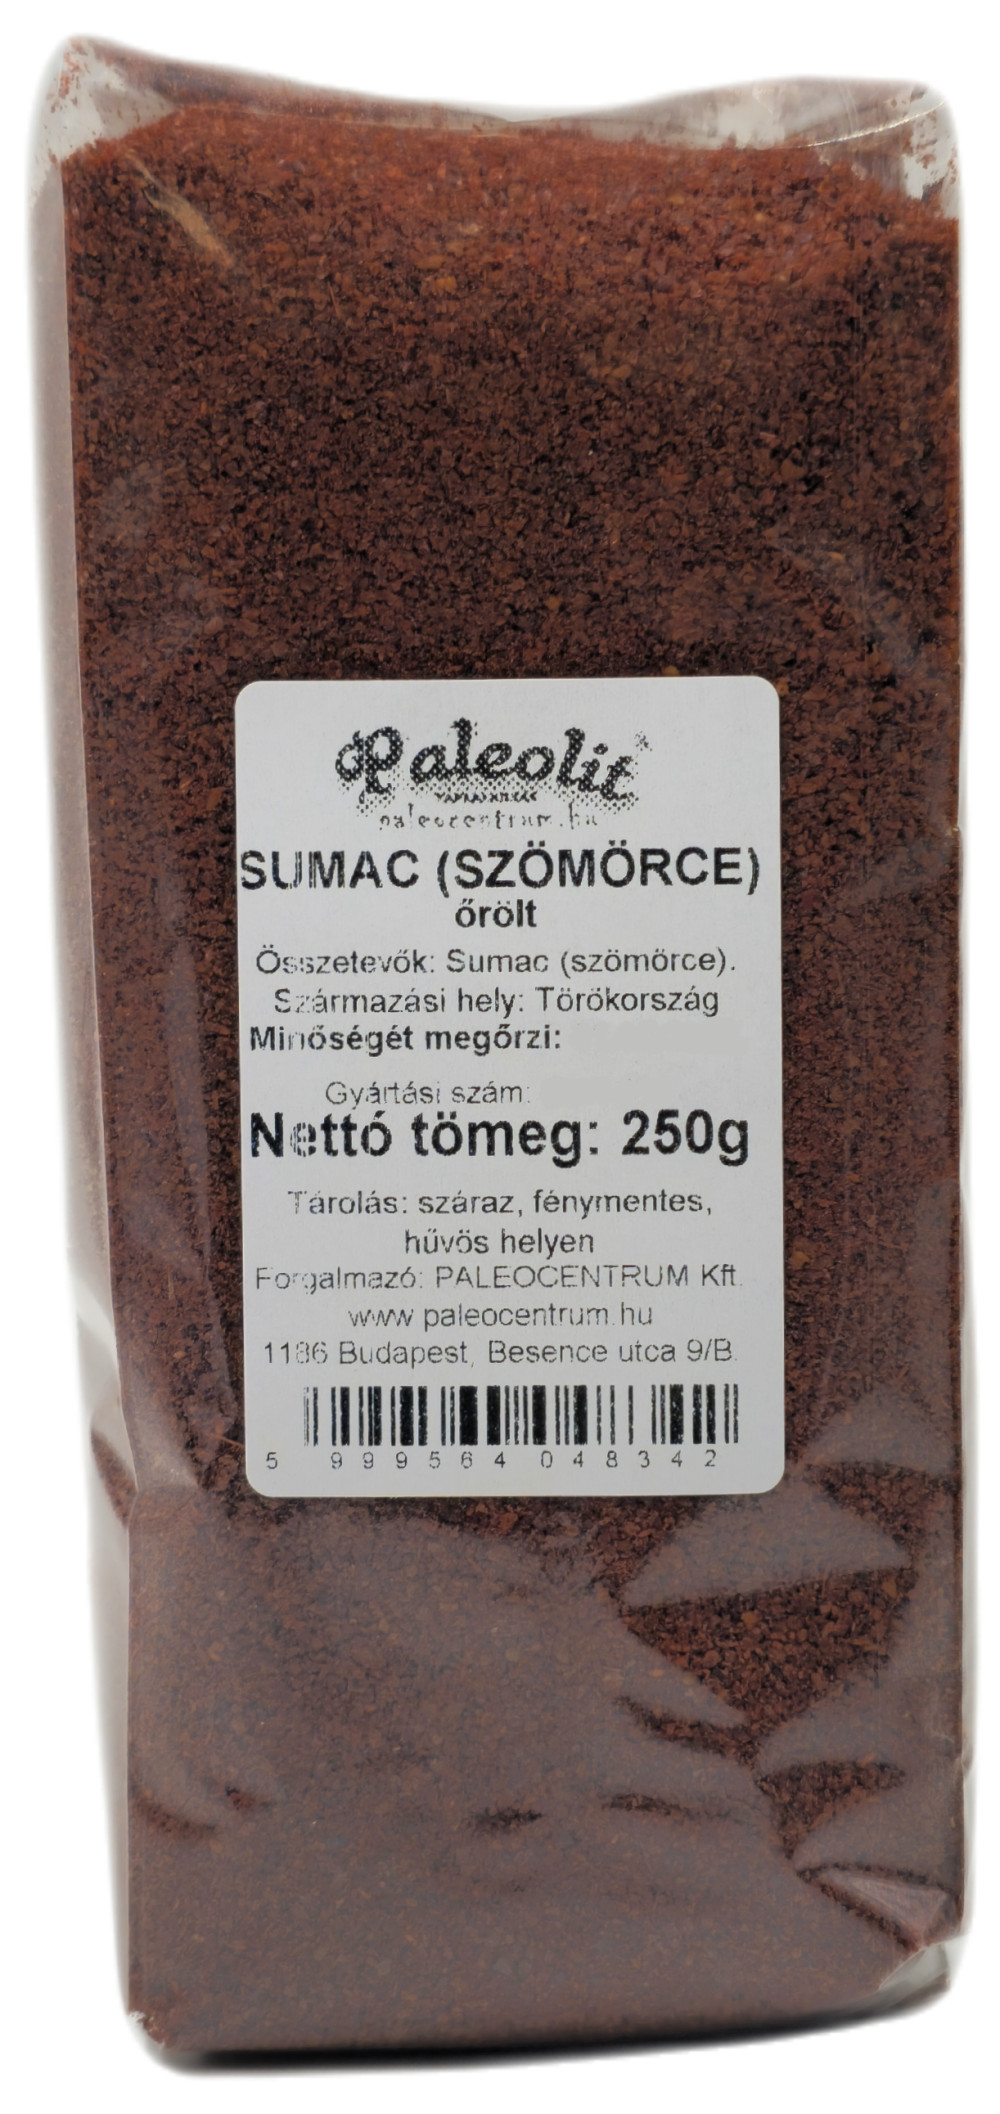 Paleolit Sumac (szömörce) 250g őrölt fűszer